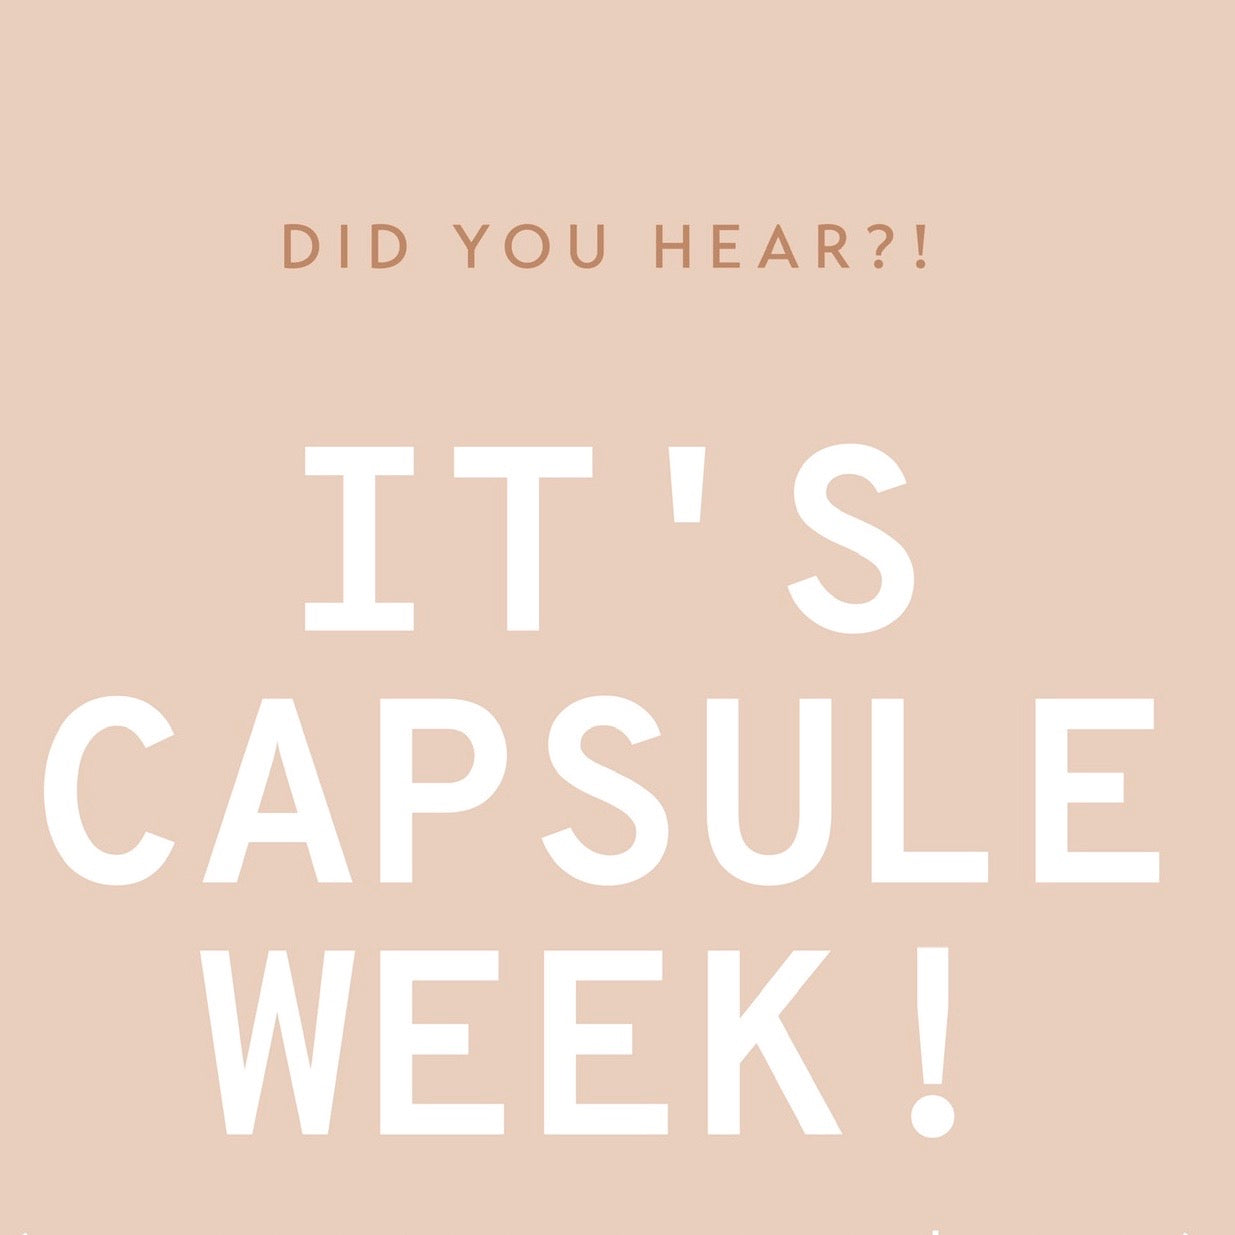 Capsule Week Recap!